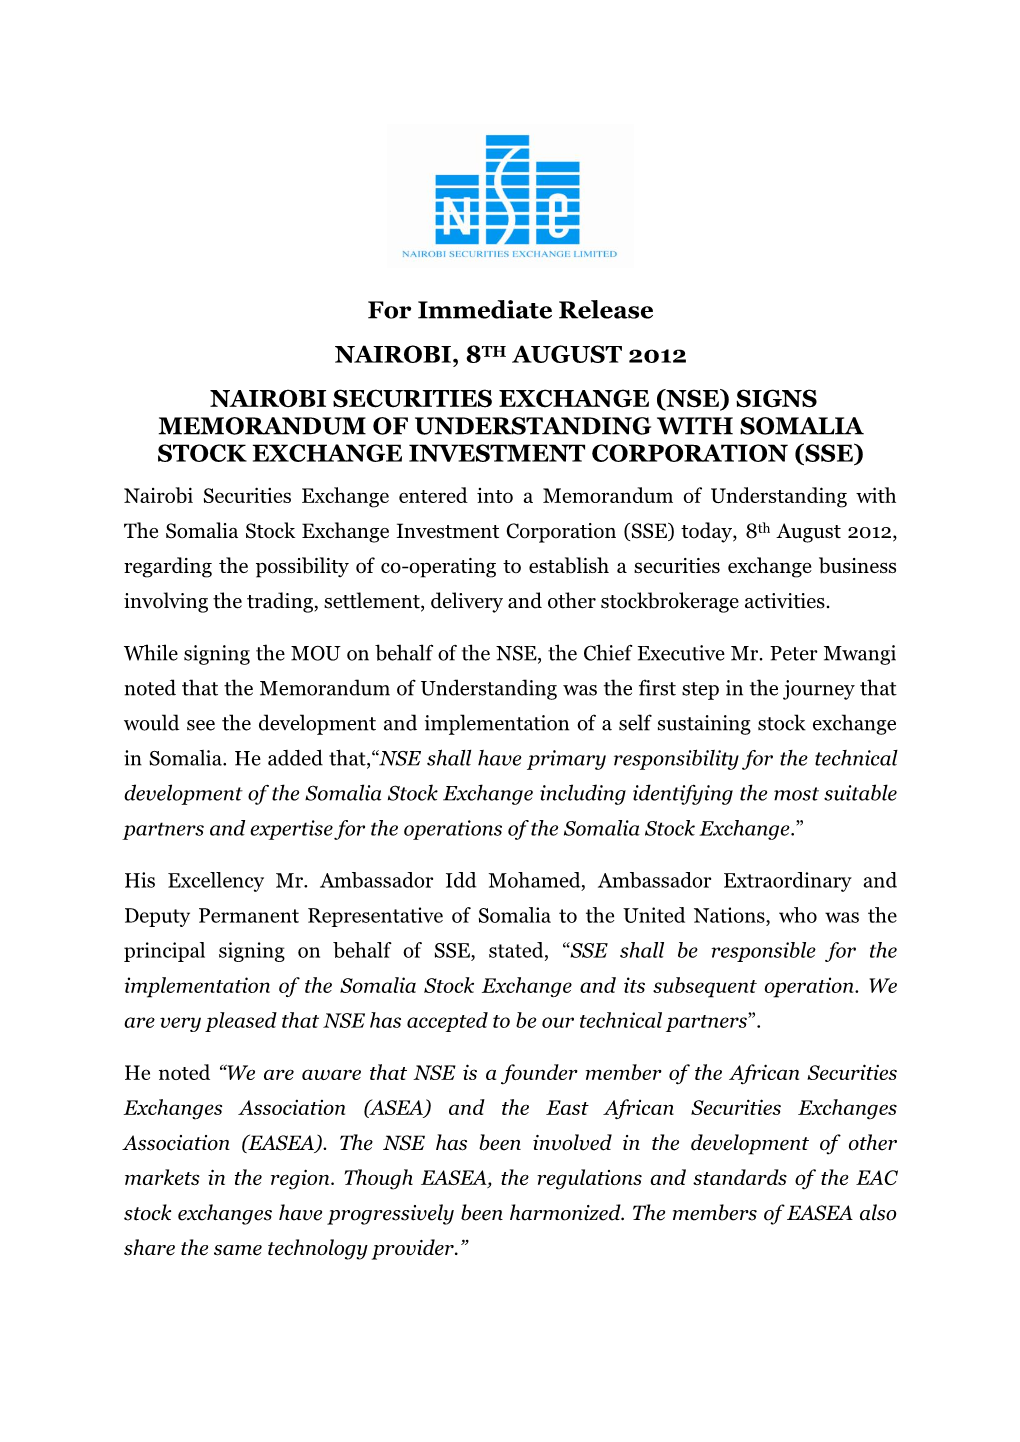 For Immediate Release NAIROBI, 8TH AUGUST 2012 NAIROBI